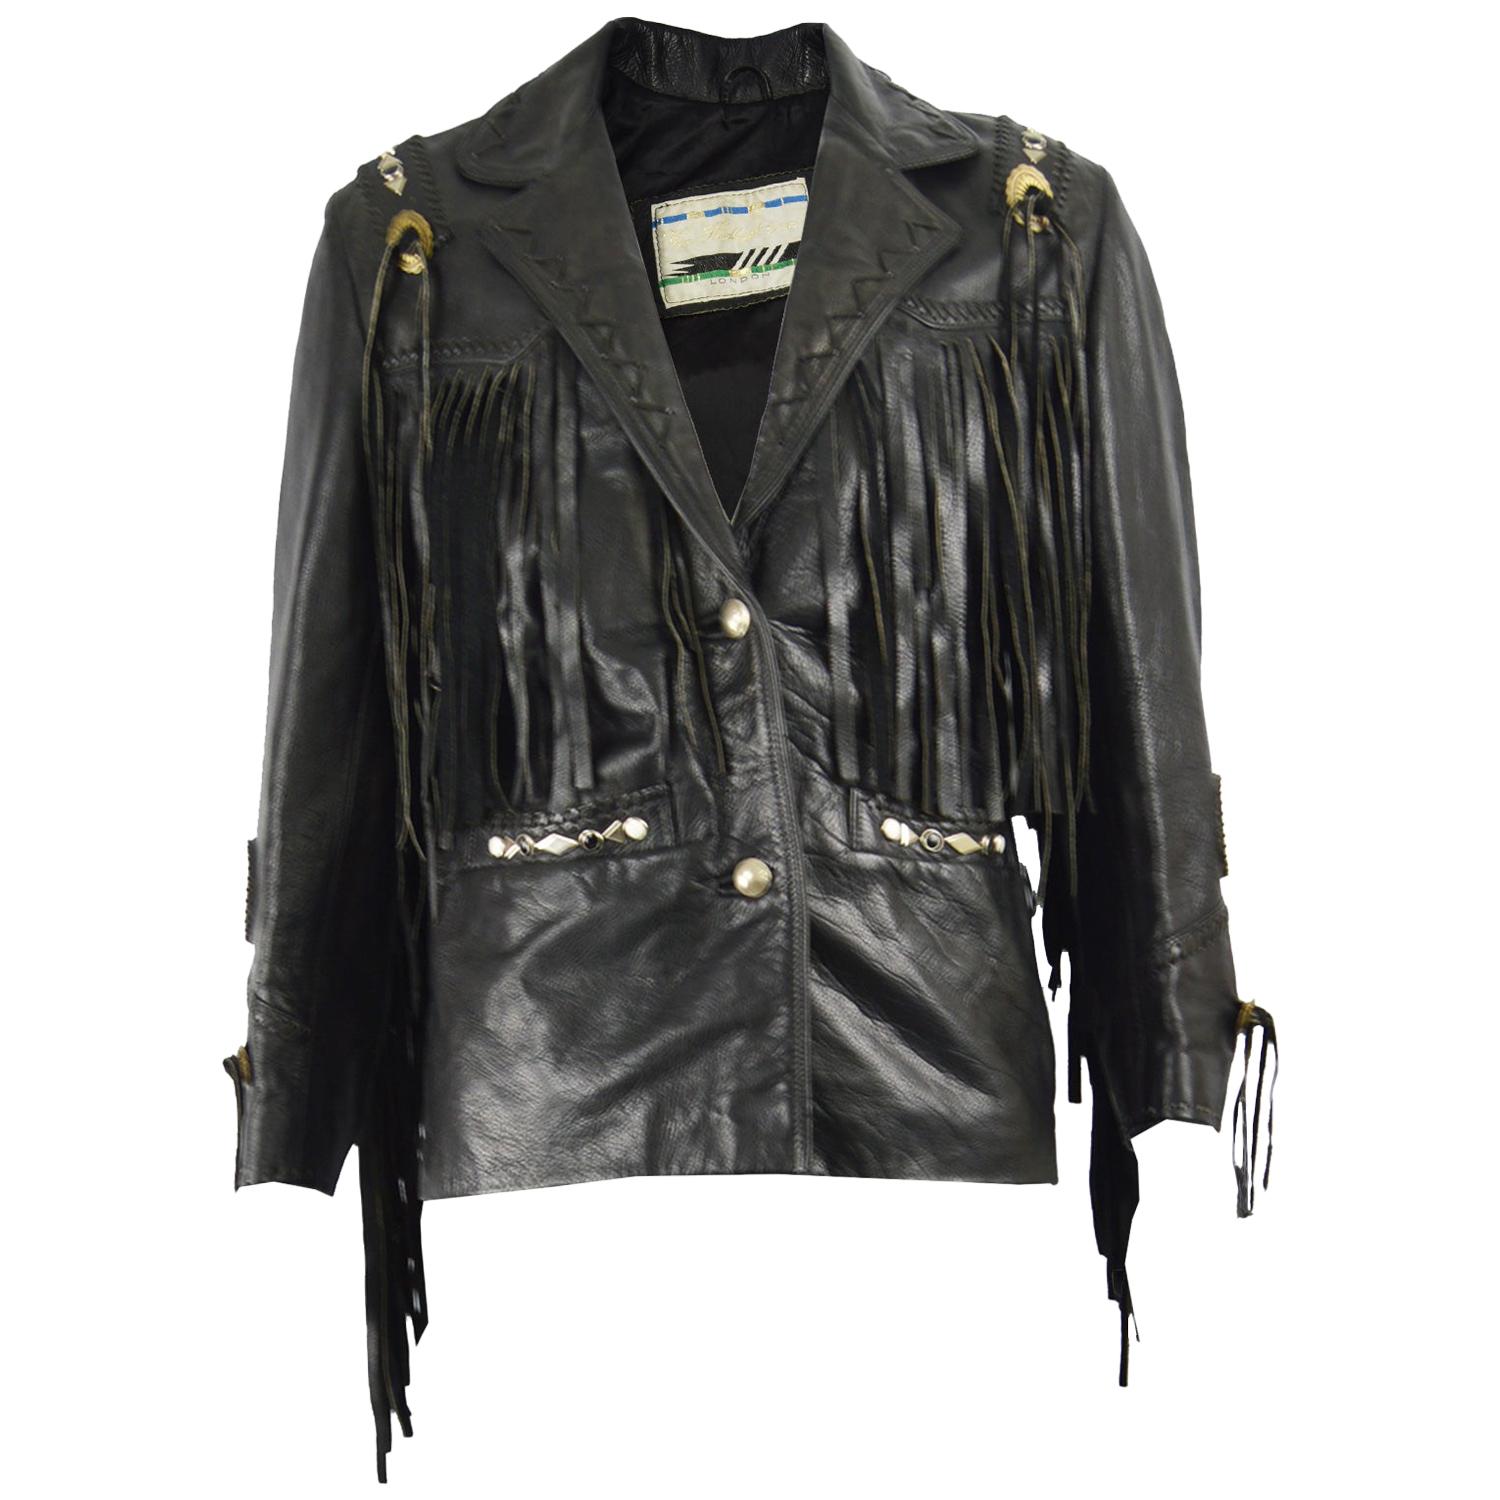 Kim Hadleigh Designs Vintage Men's Fringed Studded Black Leather Jacket, 1980s